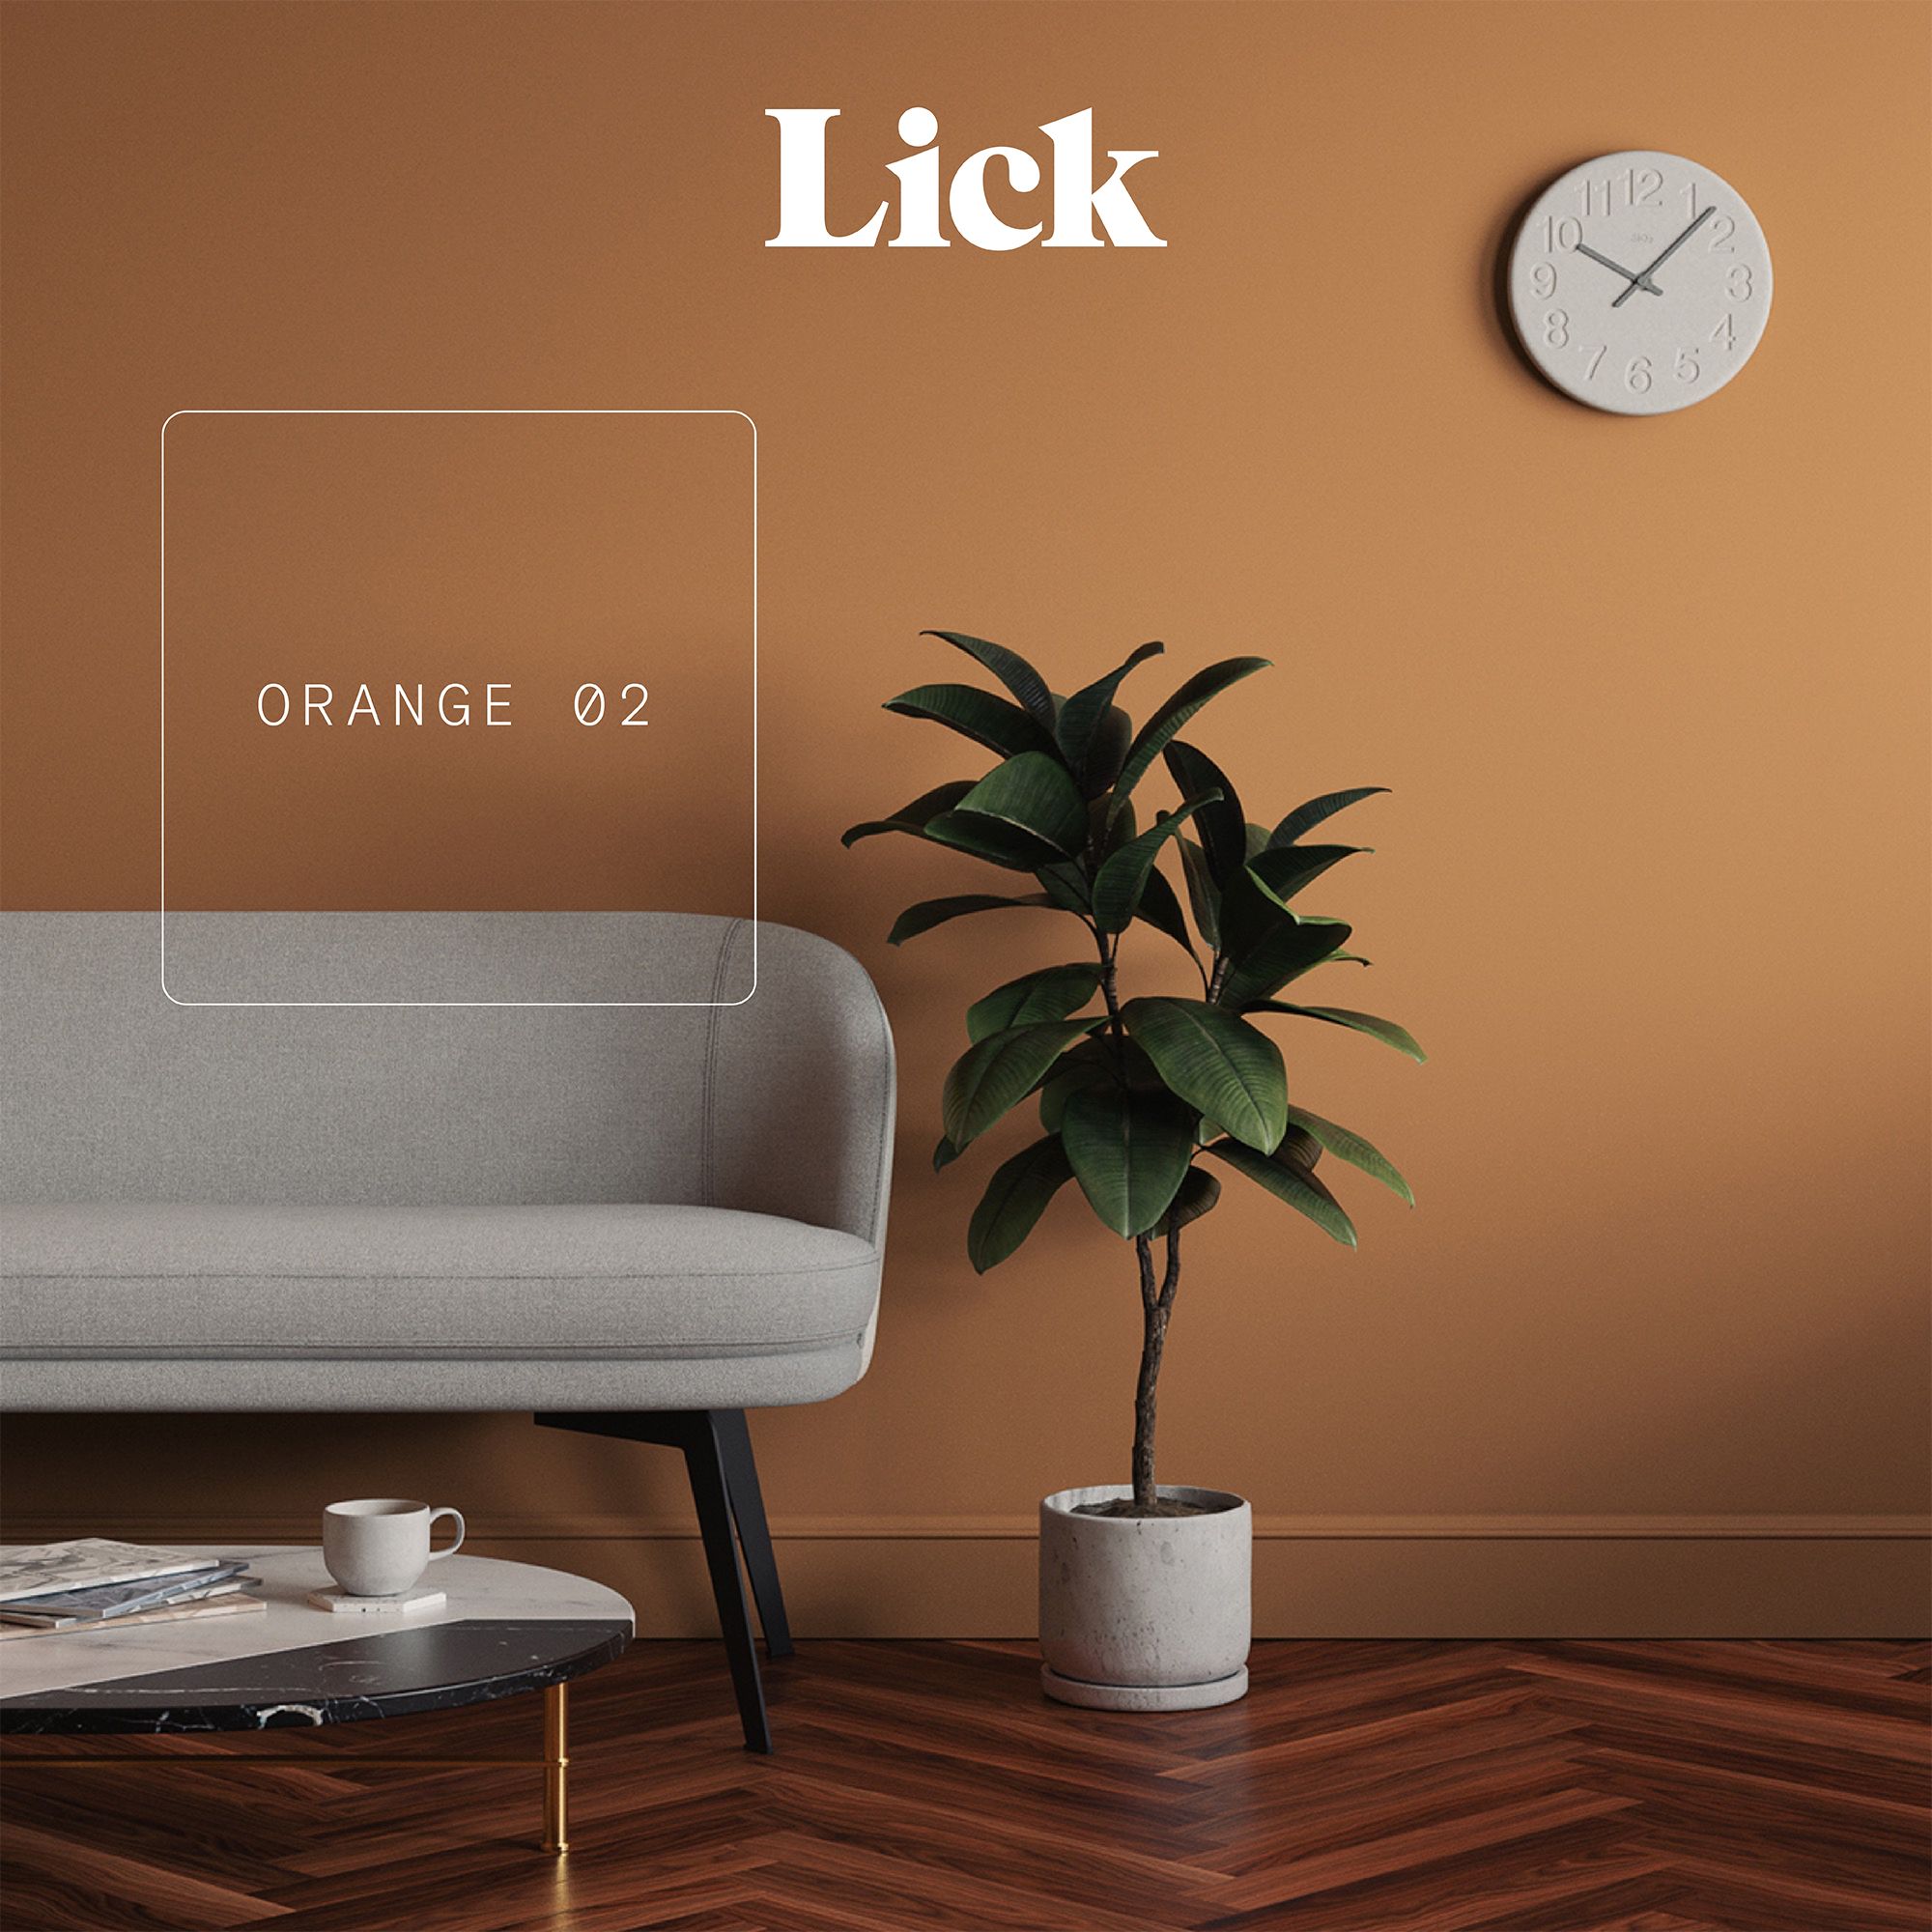 Lick Orange 02 Matt Emulsion paint, 2.5L